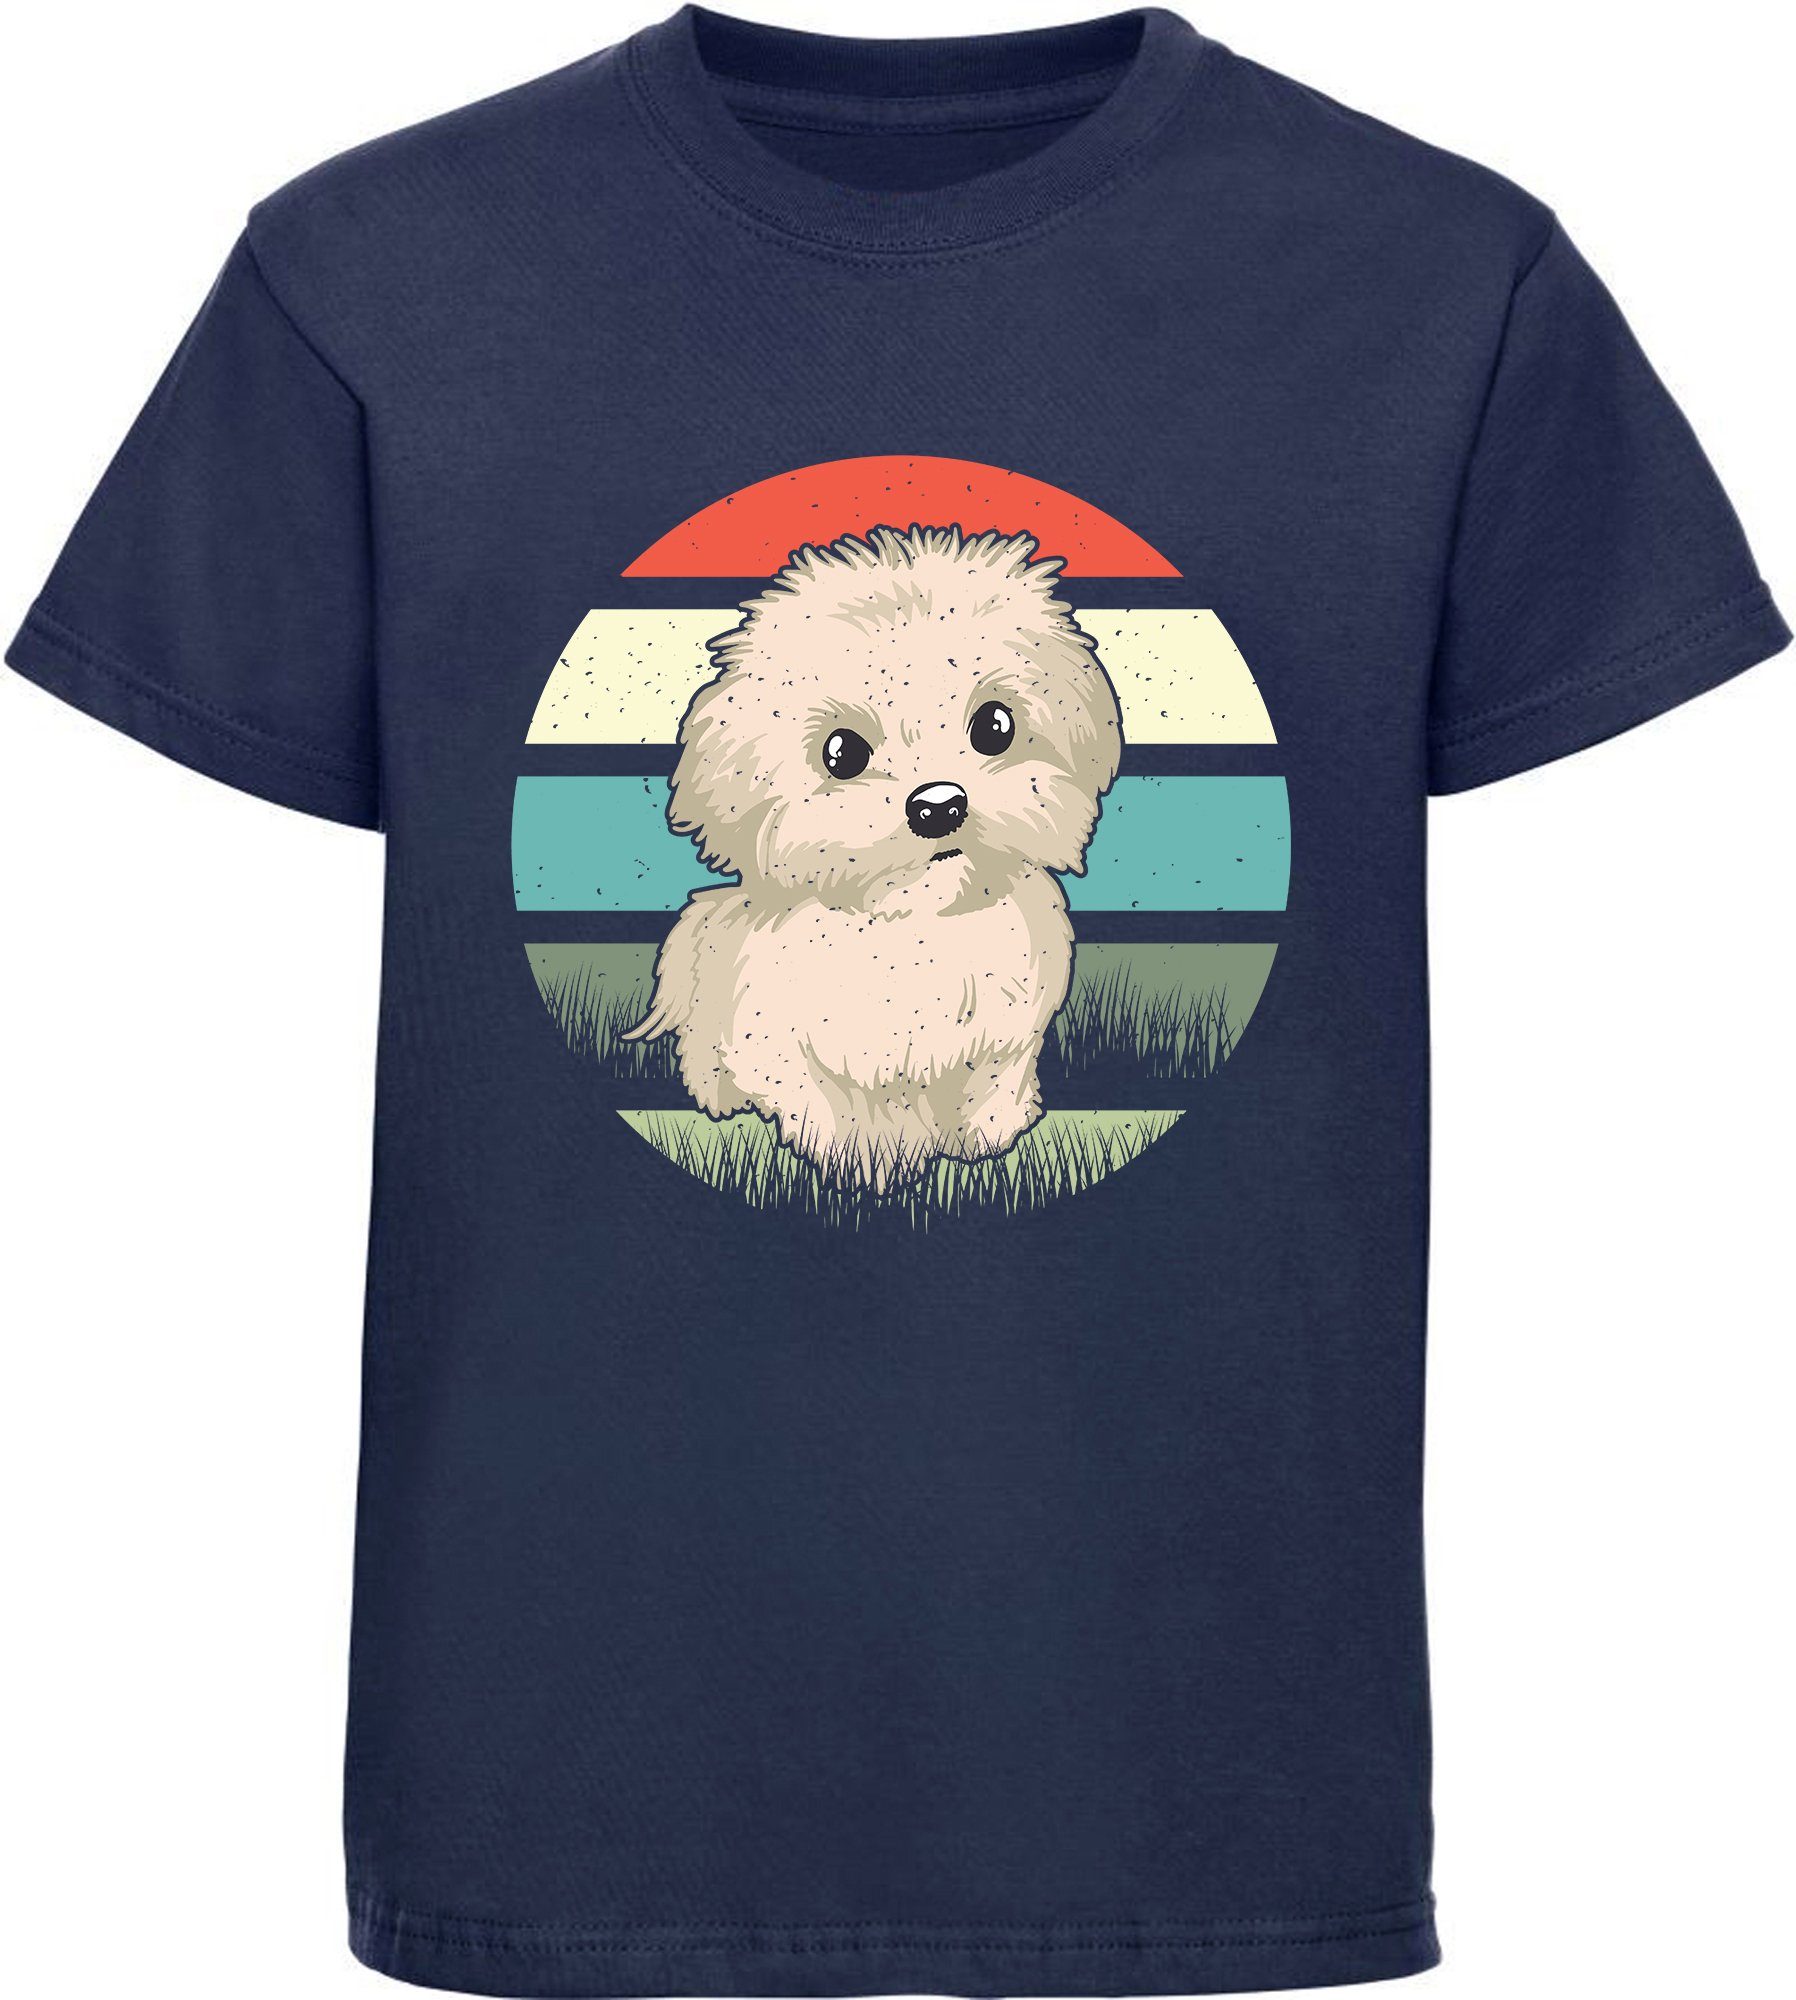 Print-Shirt Aufdruck, navy i242 Malteser Retro Kinder T-Shirt mit blau - Welpen bedruckt MyDesign24 Baumwollshirt Hunde